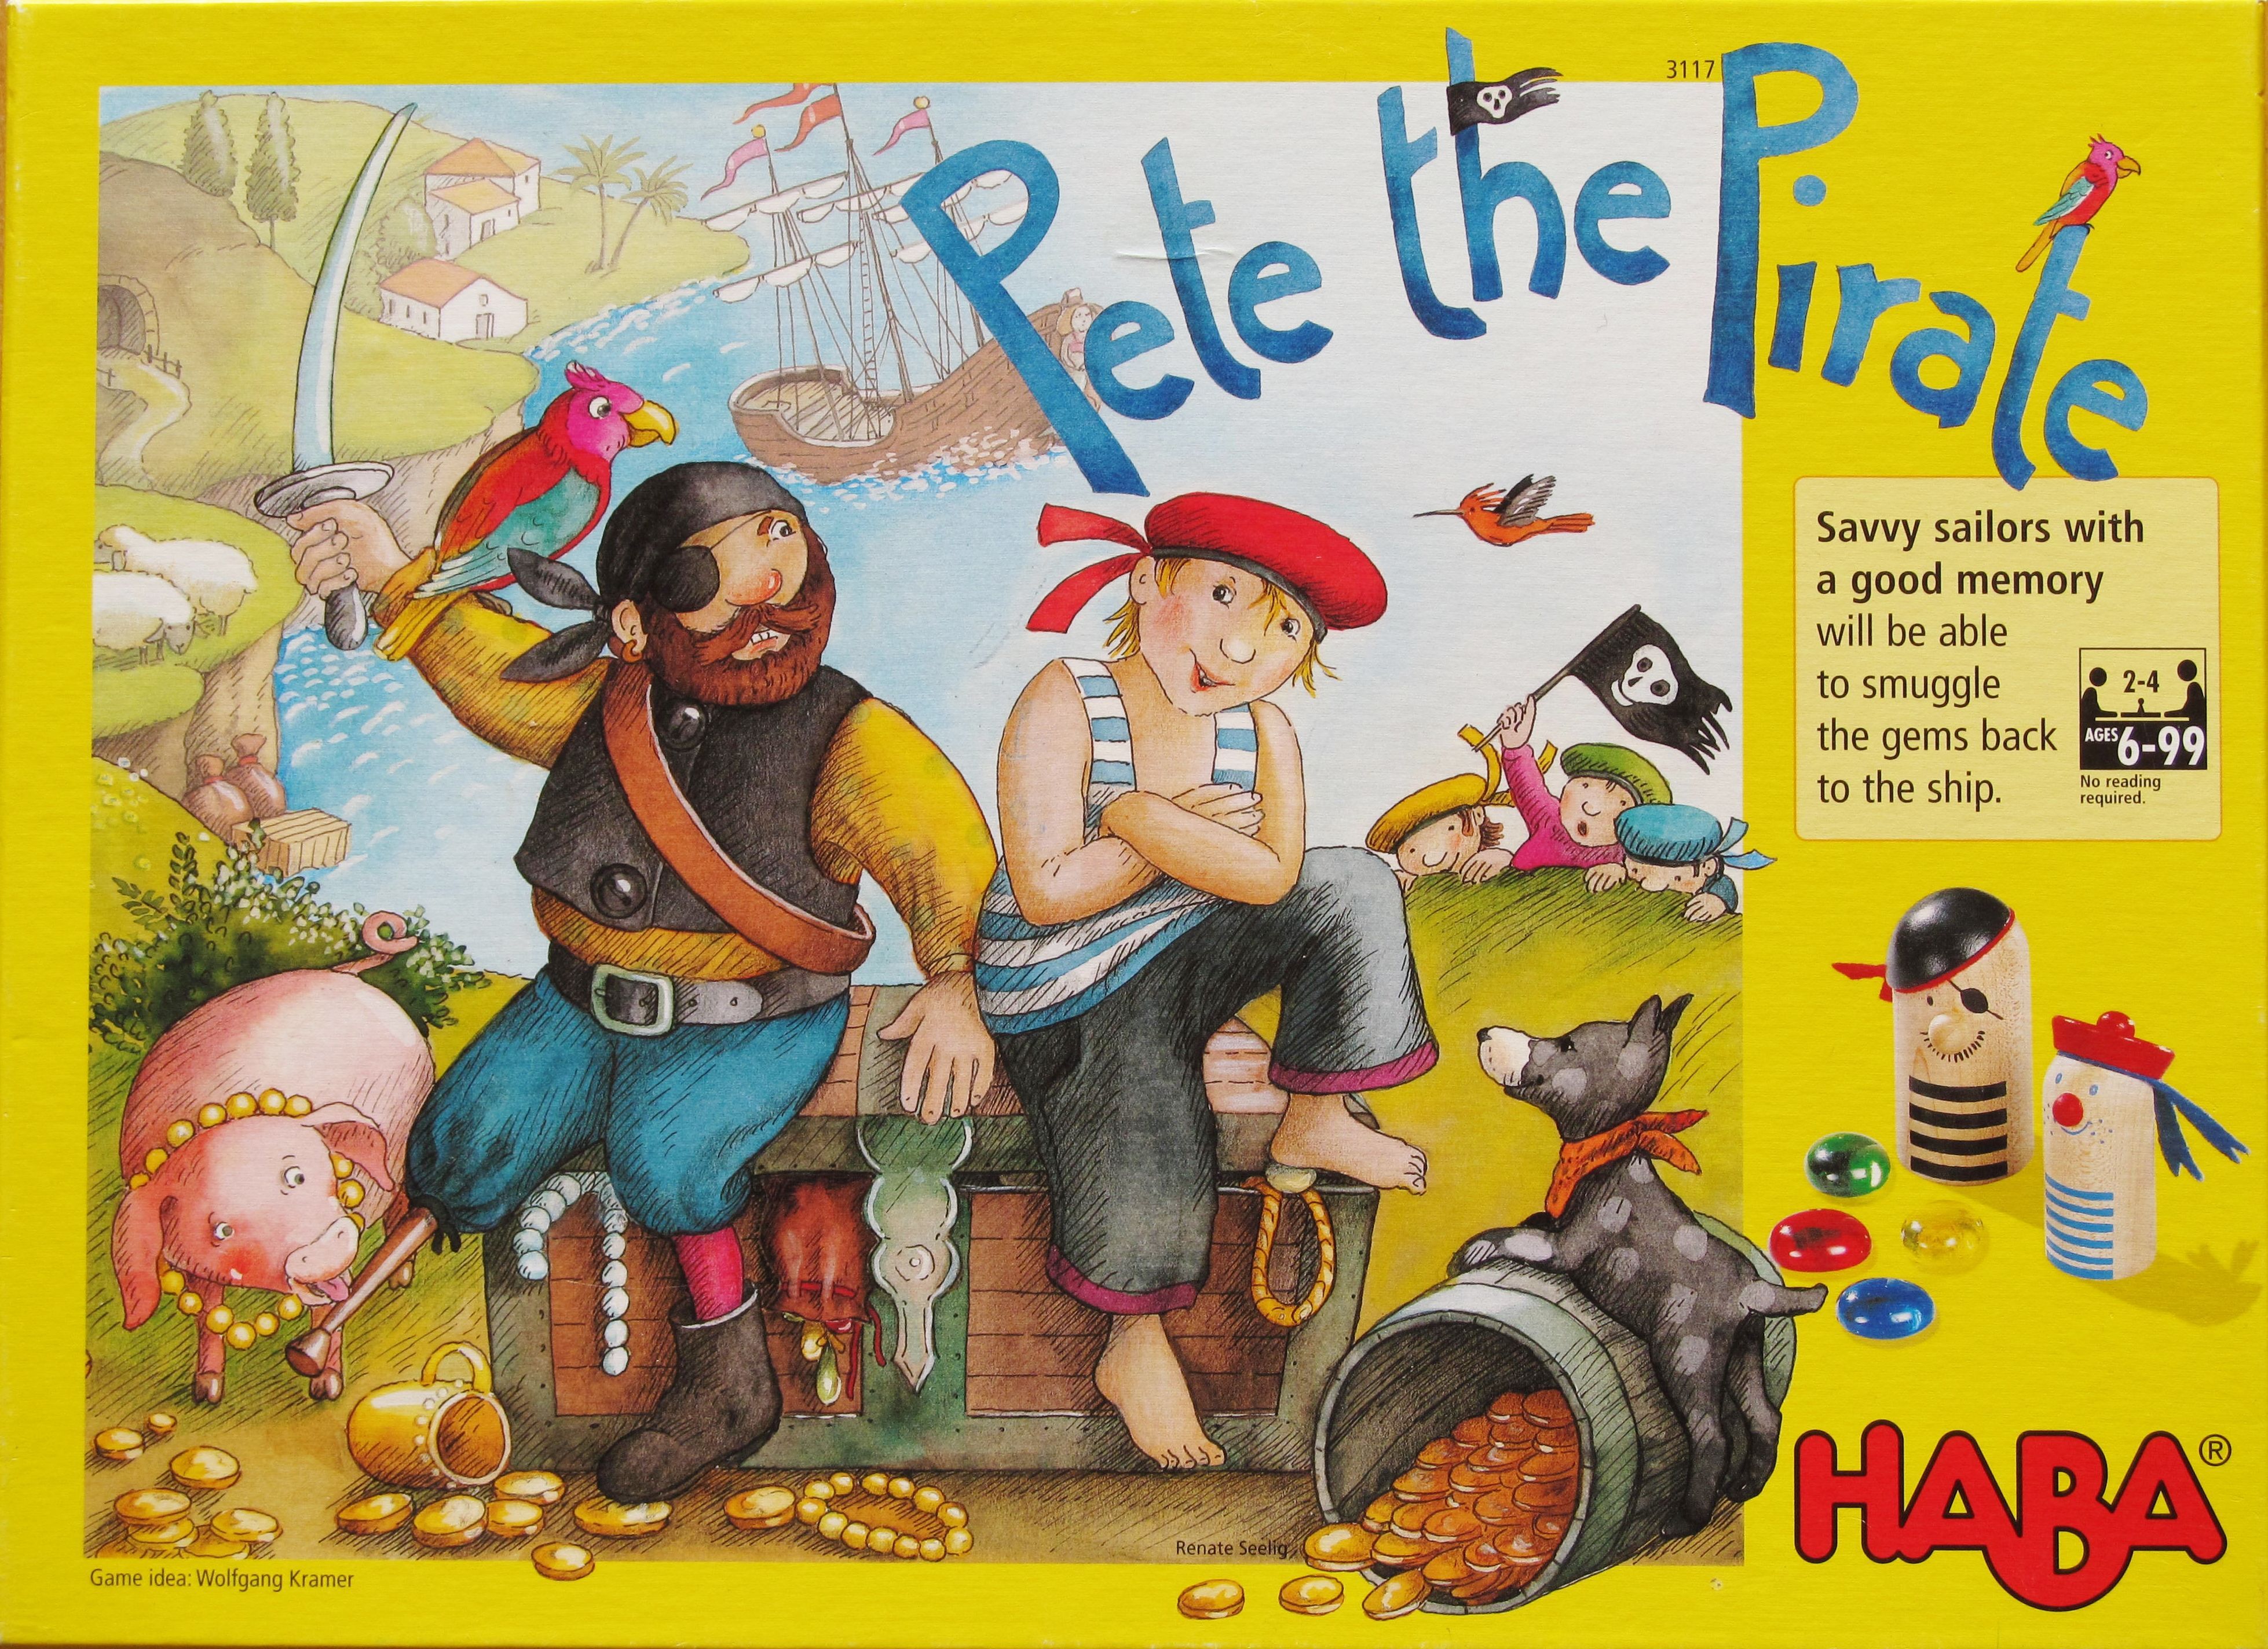 Pete the Pirate